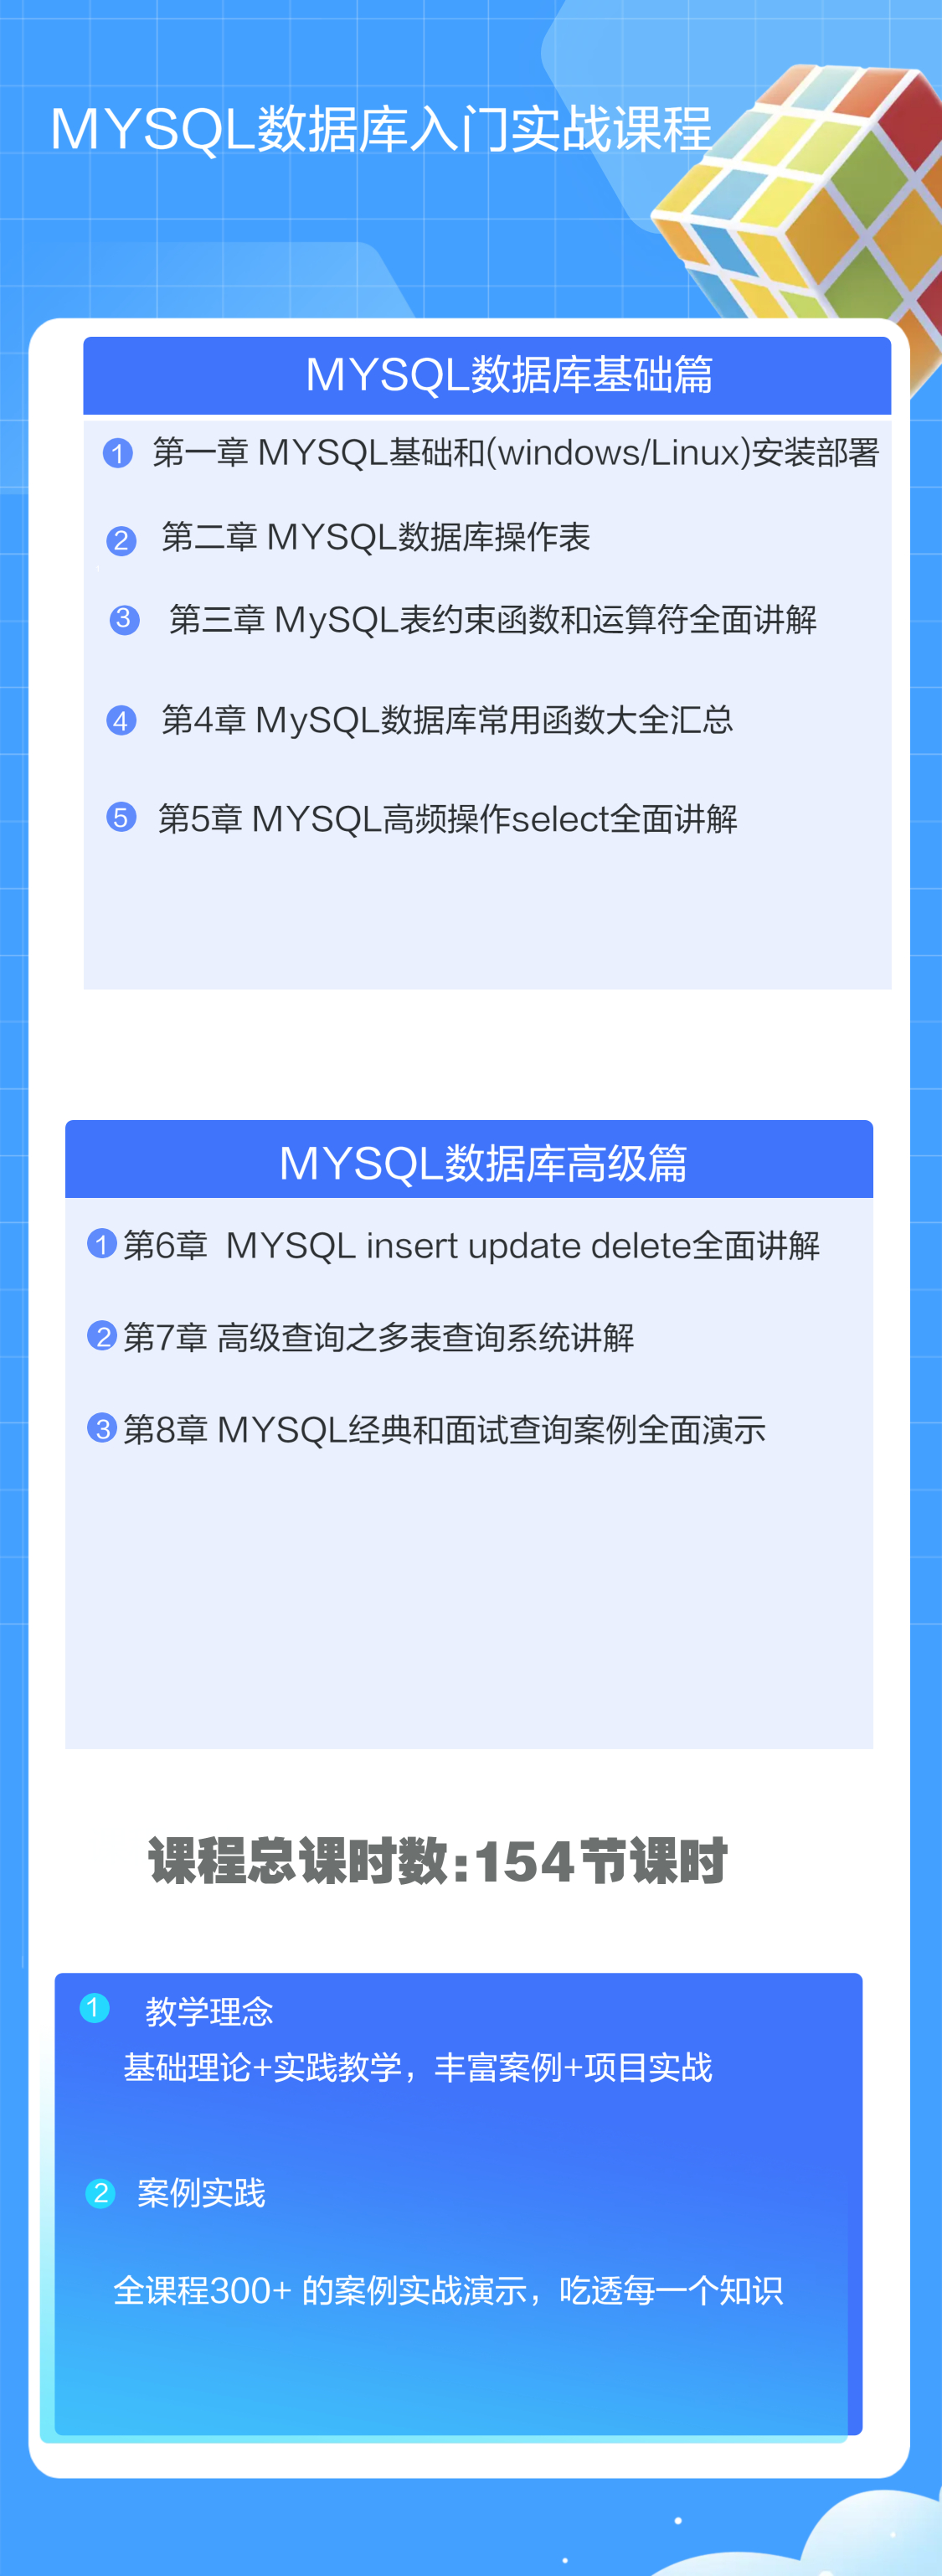 MYSQL数据库入门实战课程.jpeg